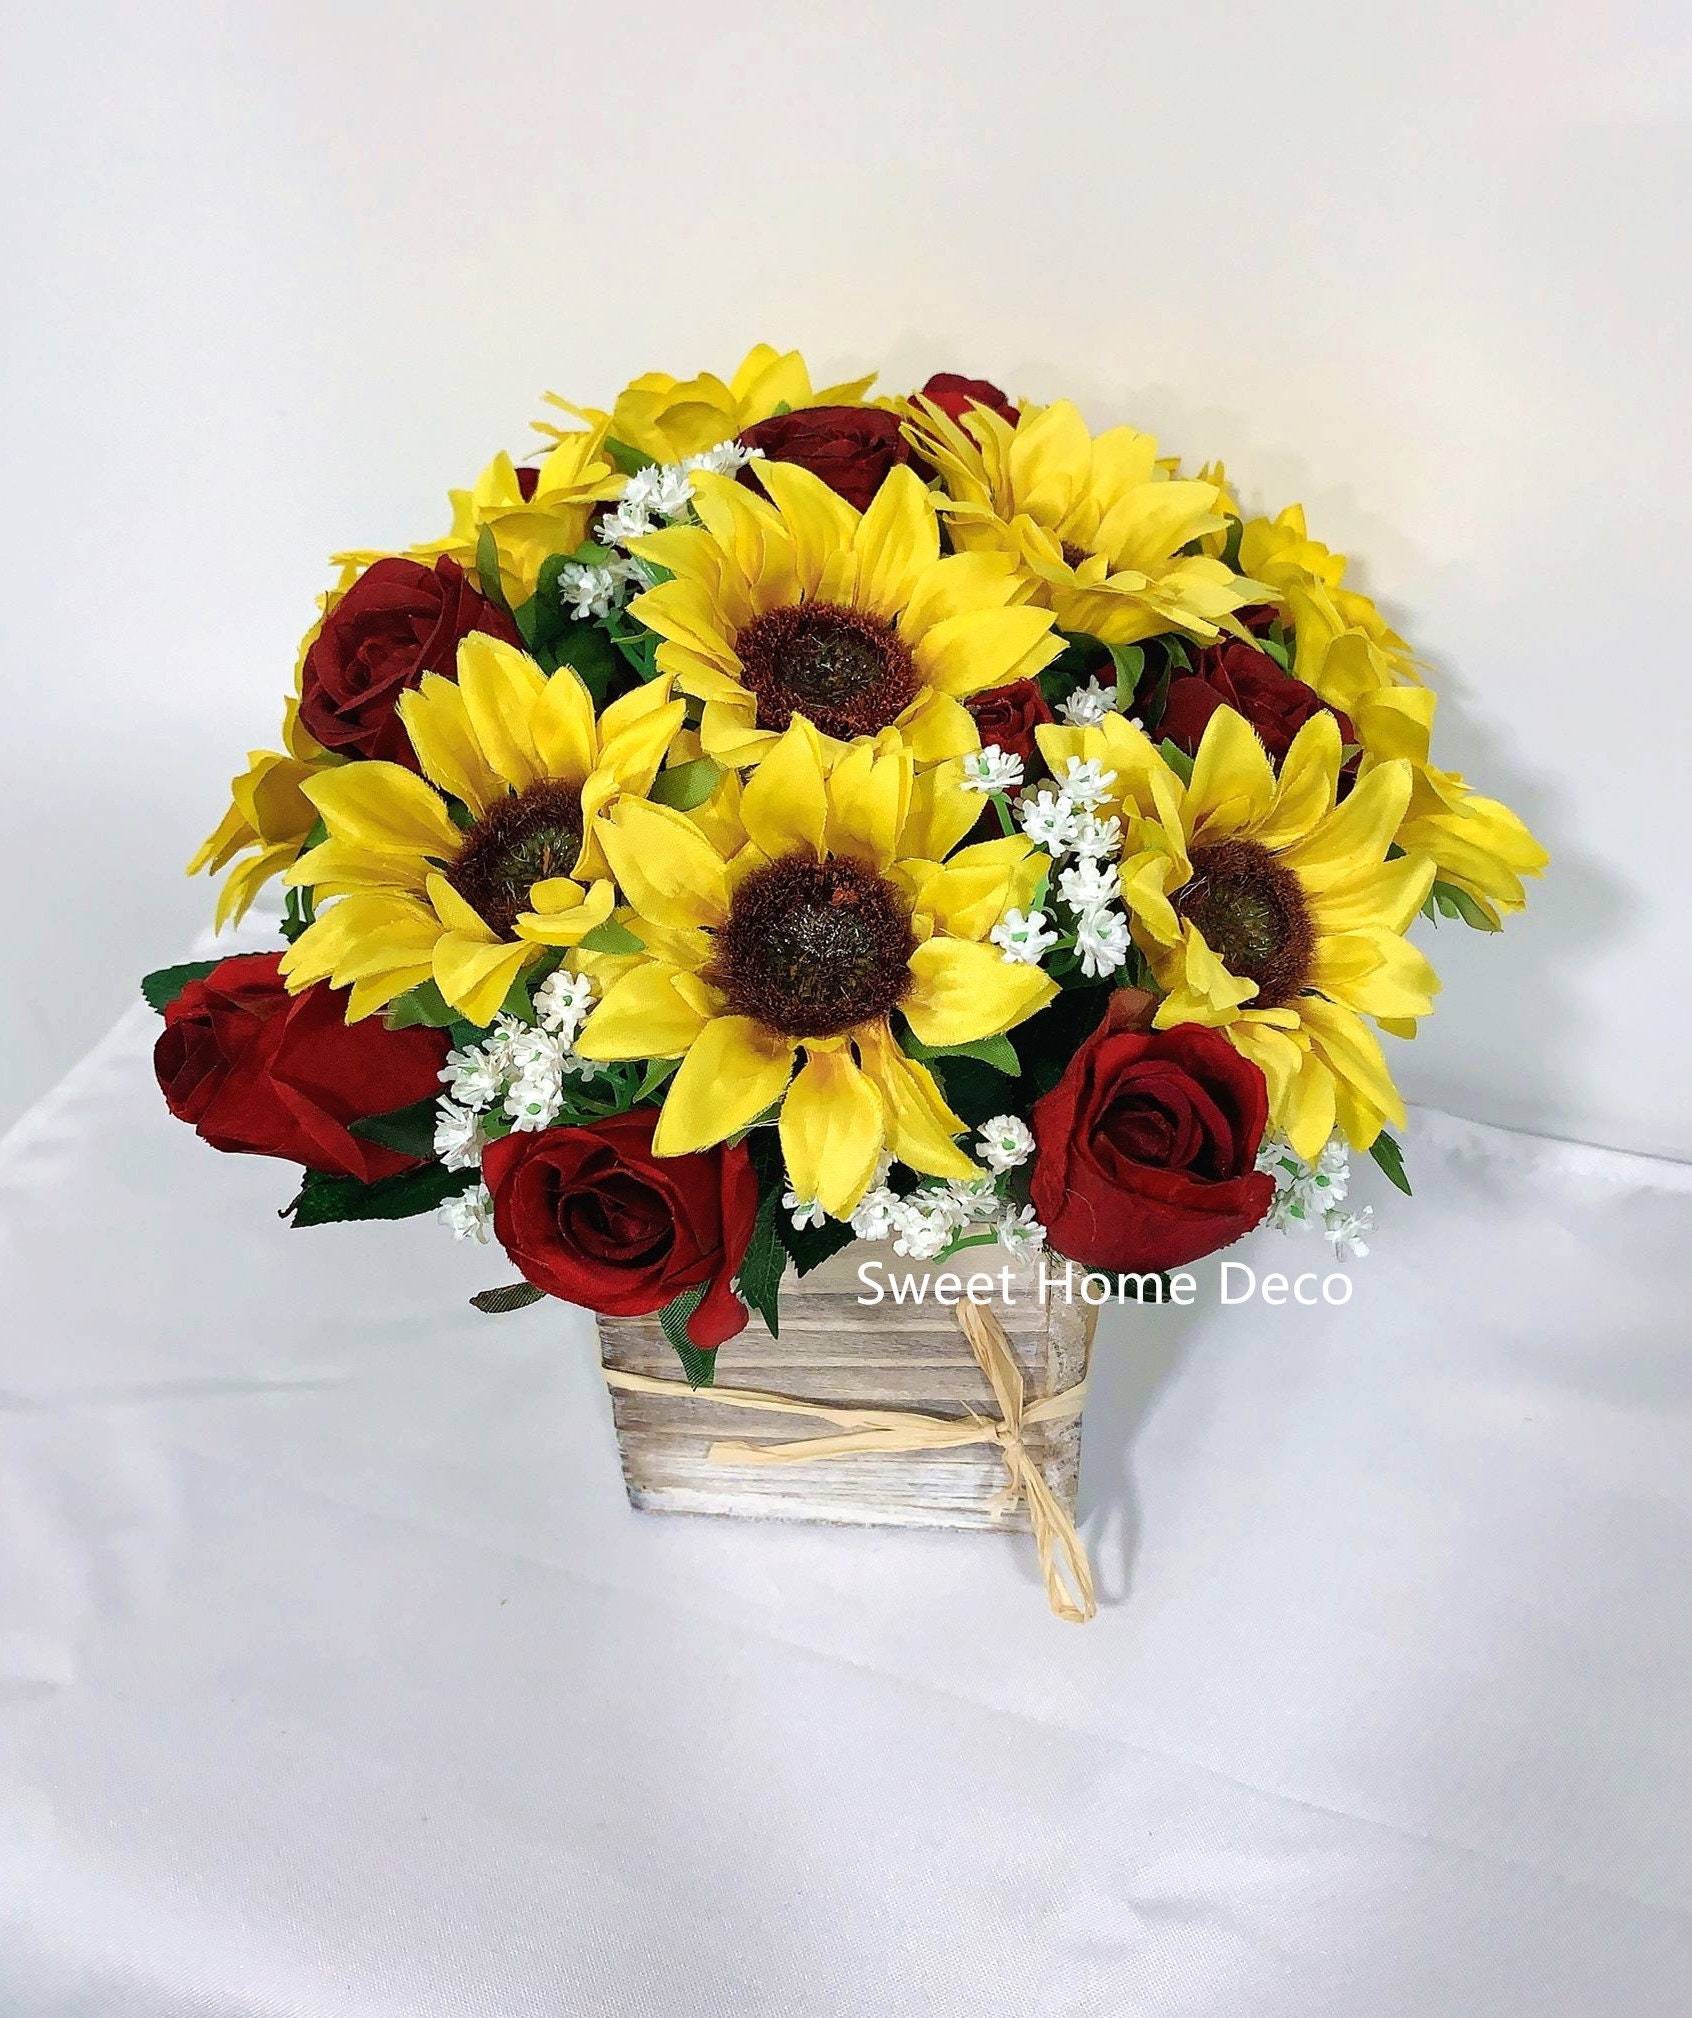 Jennysflowershop 10'' Silk Rose Sunflower Arrangement W/ Wood Vase